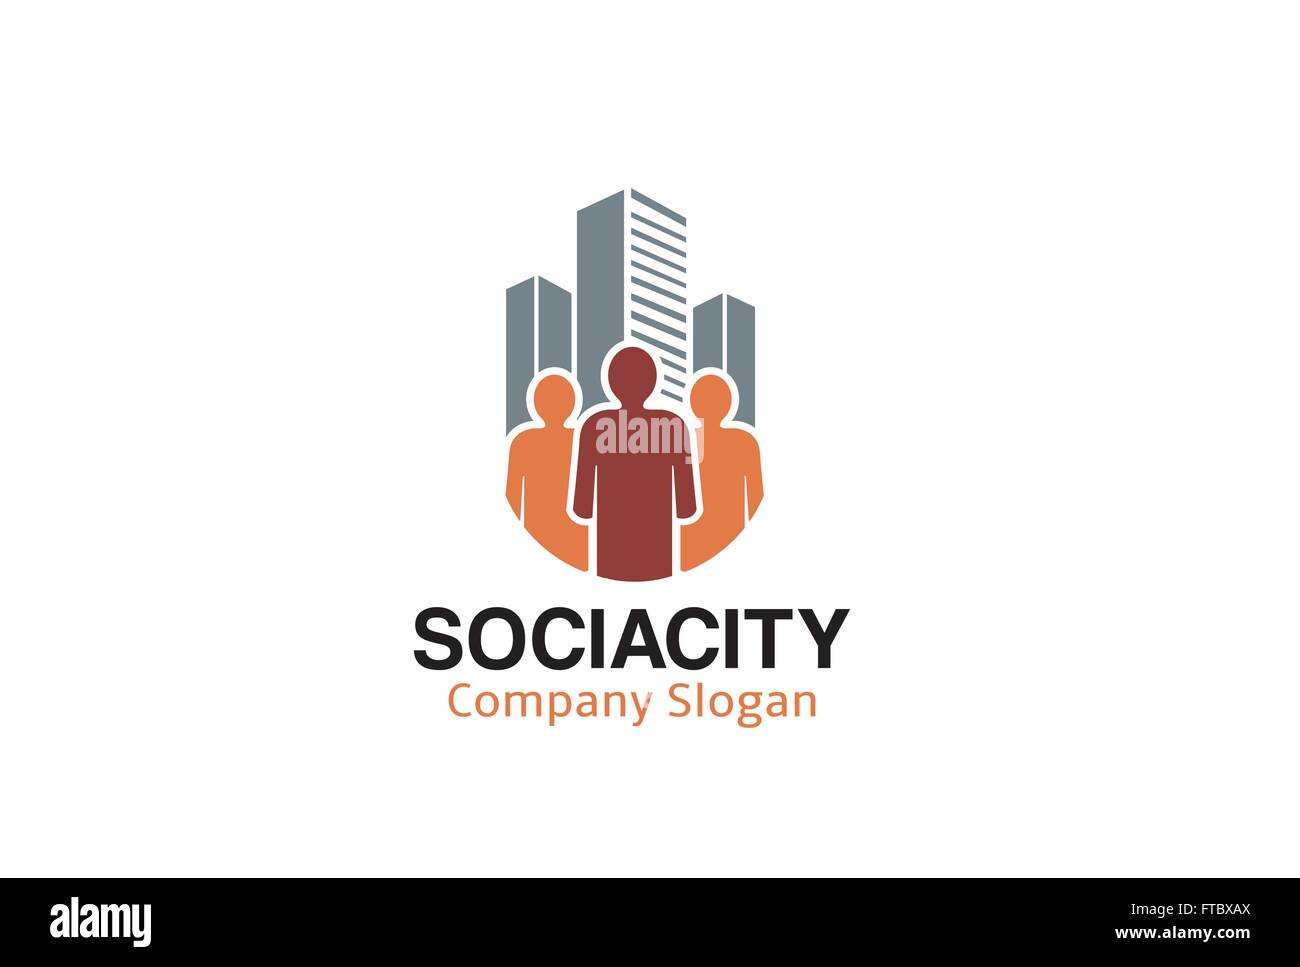 Soziale Stadt-Design-Darstellung Stock Vektor